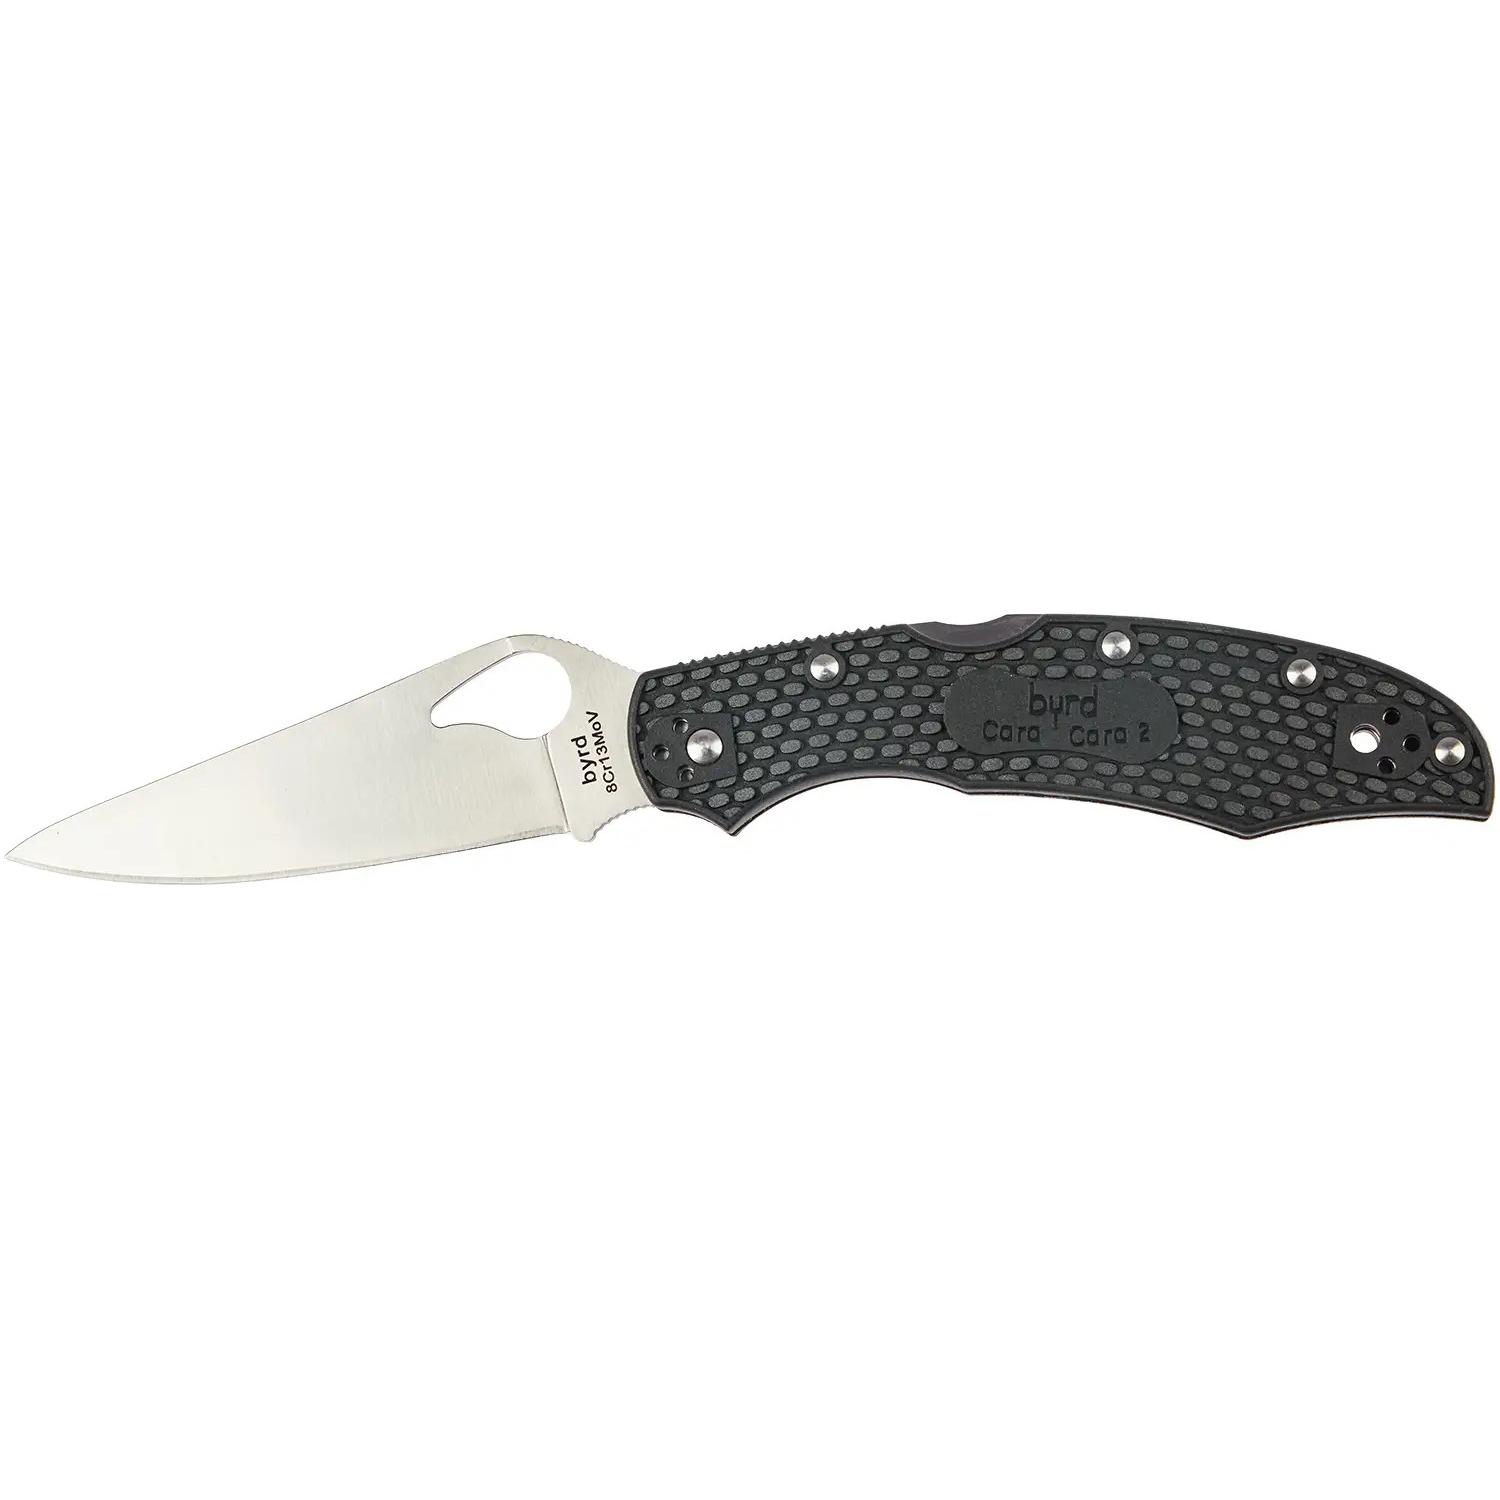 Нож Spyderco Byrd Cara Cara2 FRN Black BY03PBK2 87.11.14